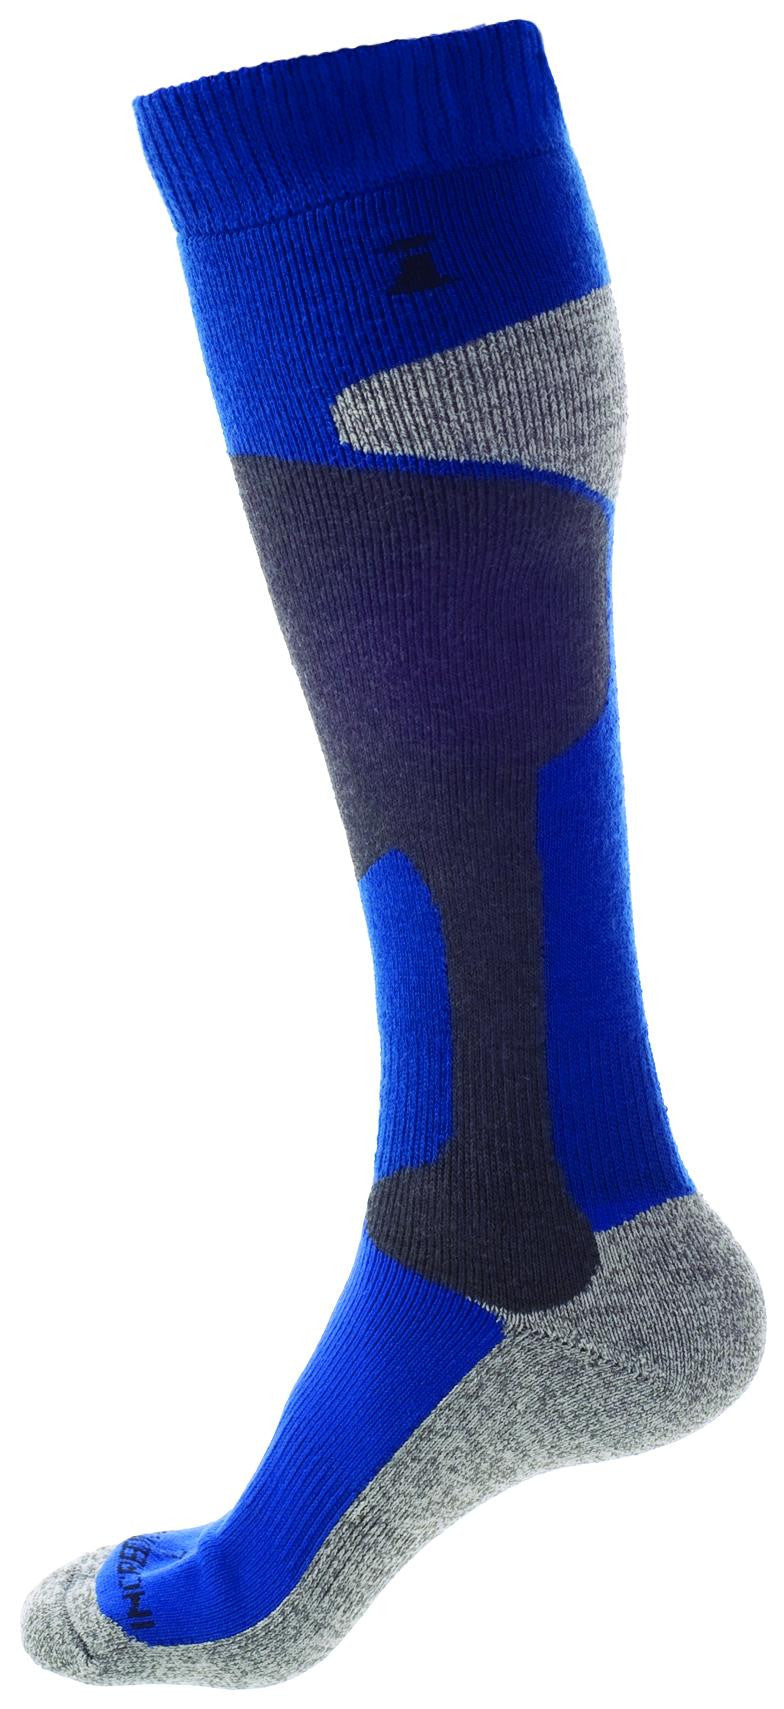 Incrediwear Avalanche Ski Socks by Incrediwear - Ebambu.ca natural health product store - free shipping <59$ 